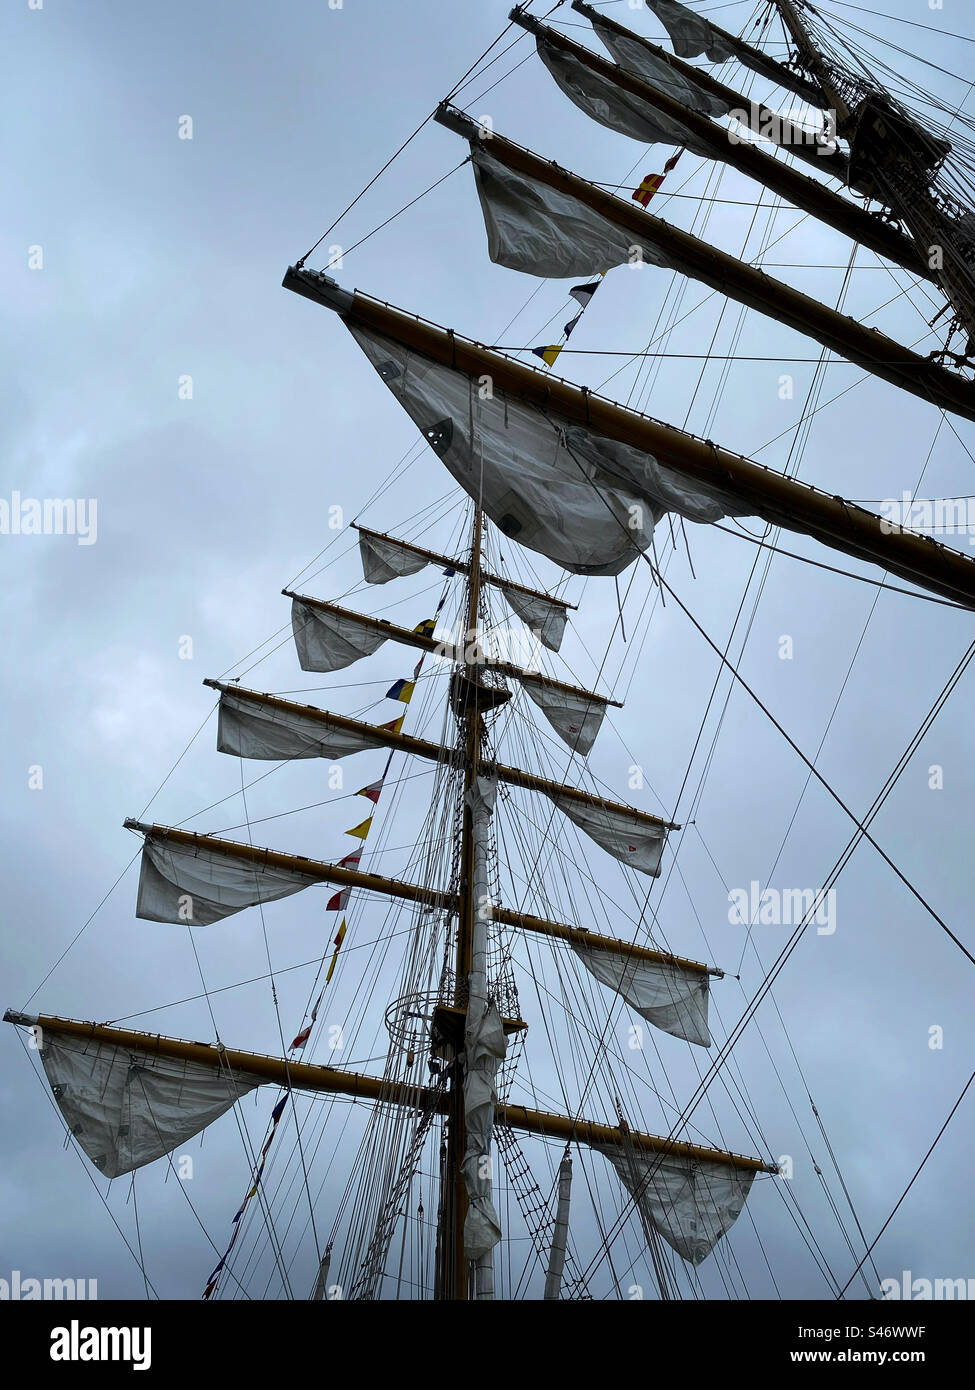 Masts and rigging of a sailing ship Stock Photo